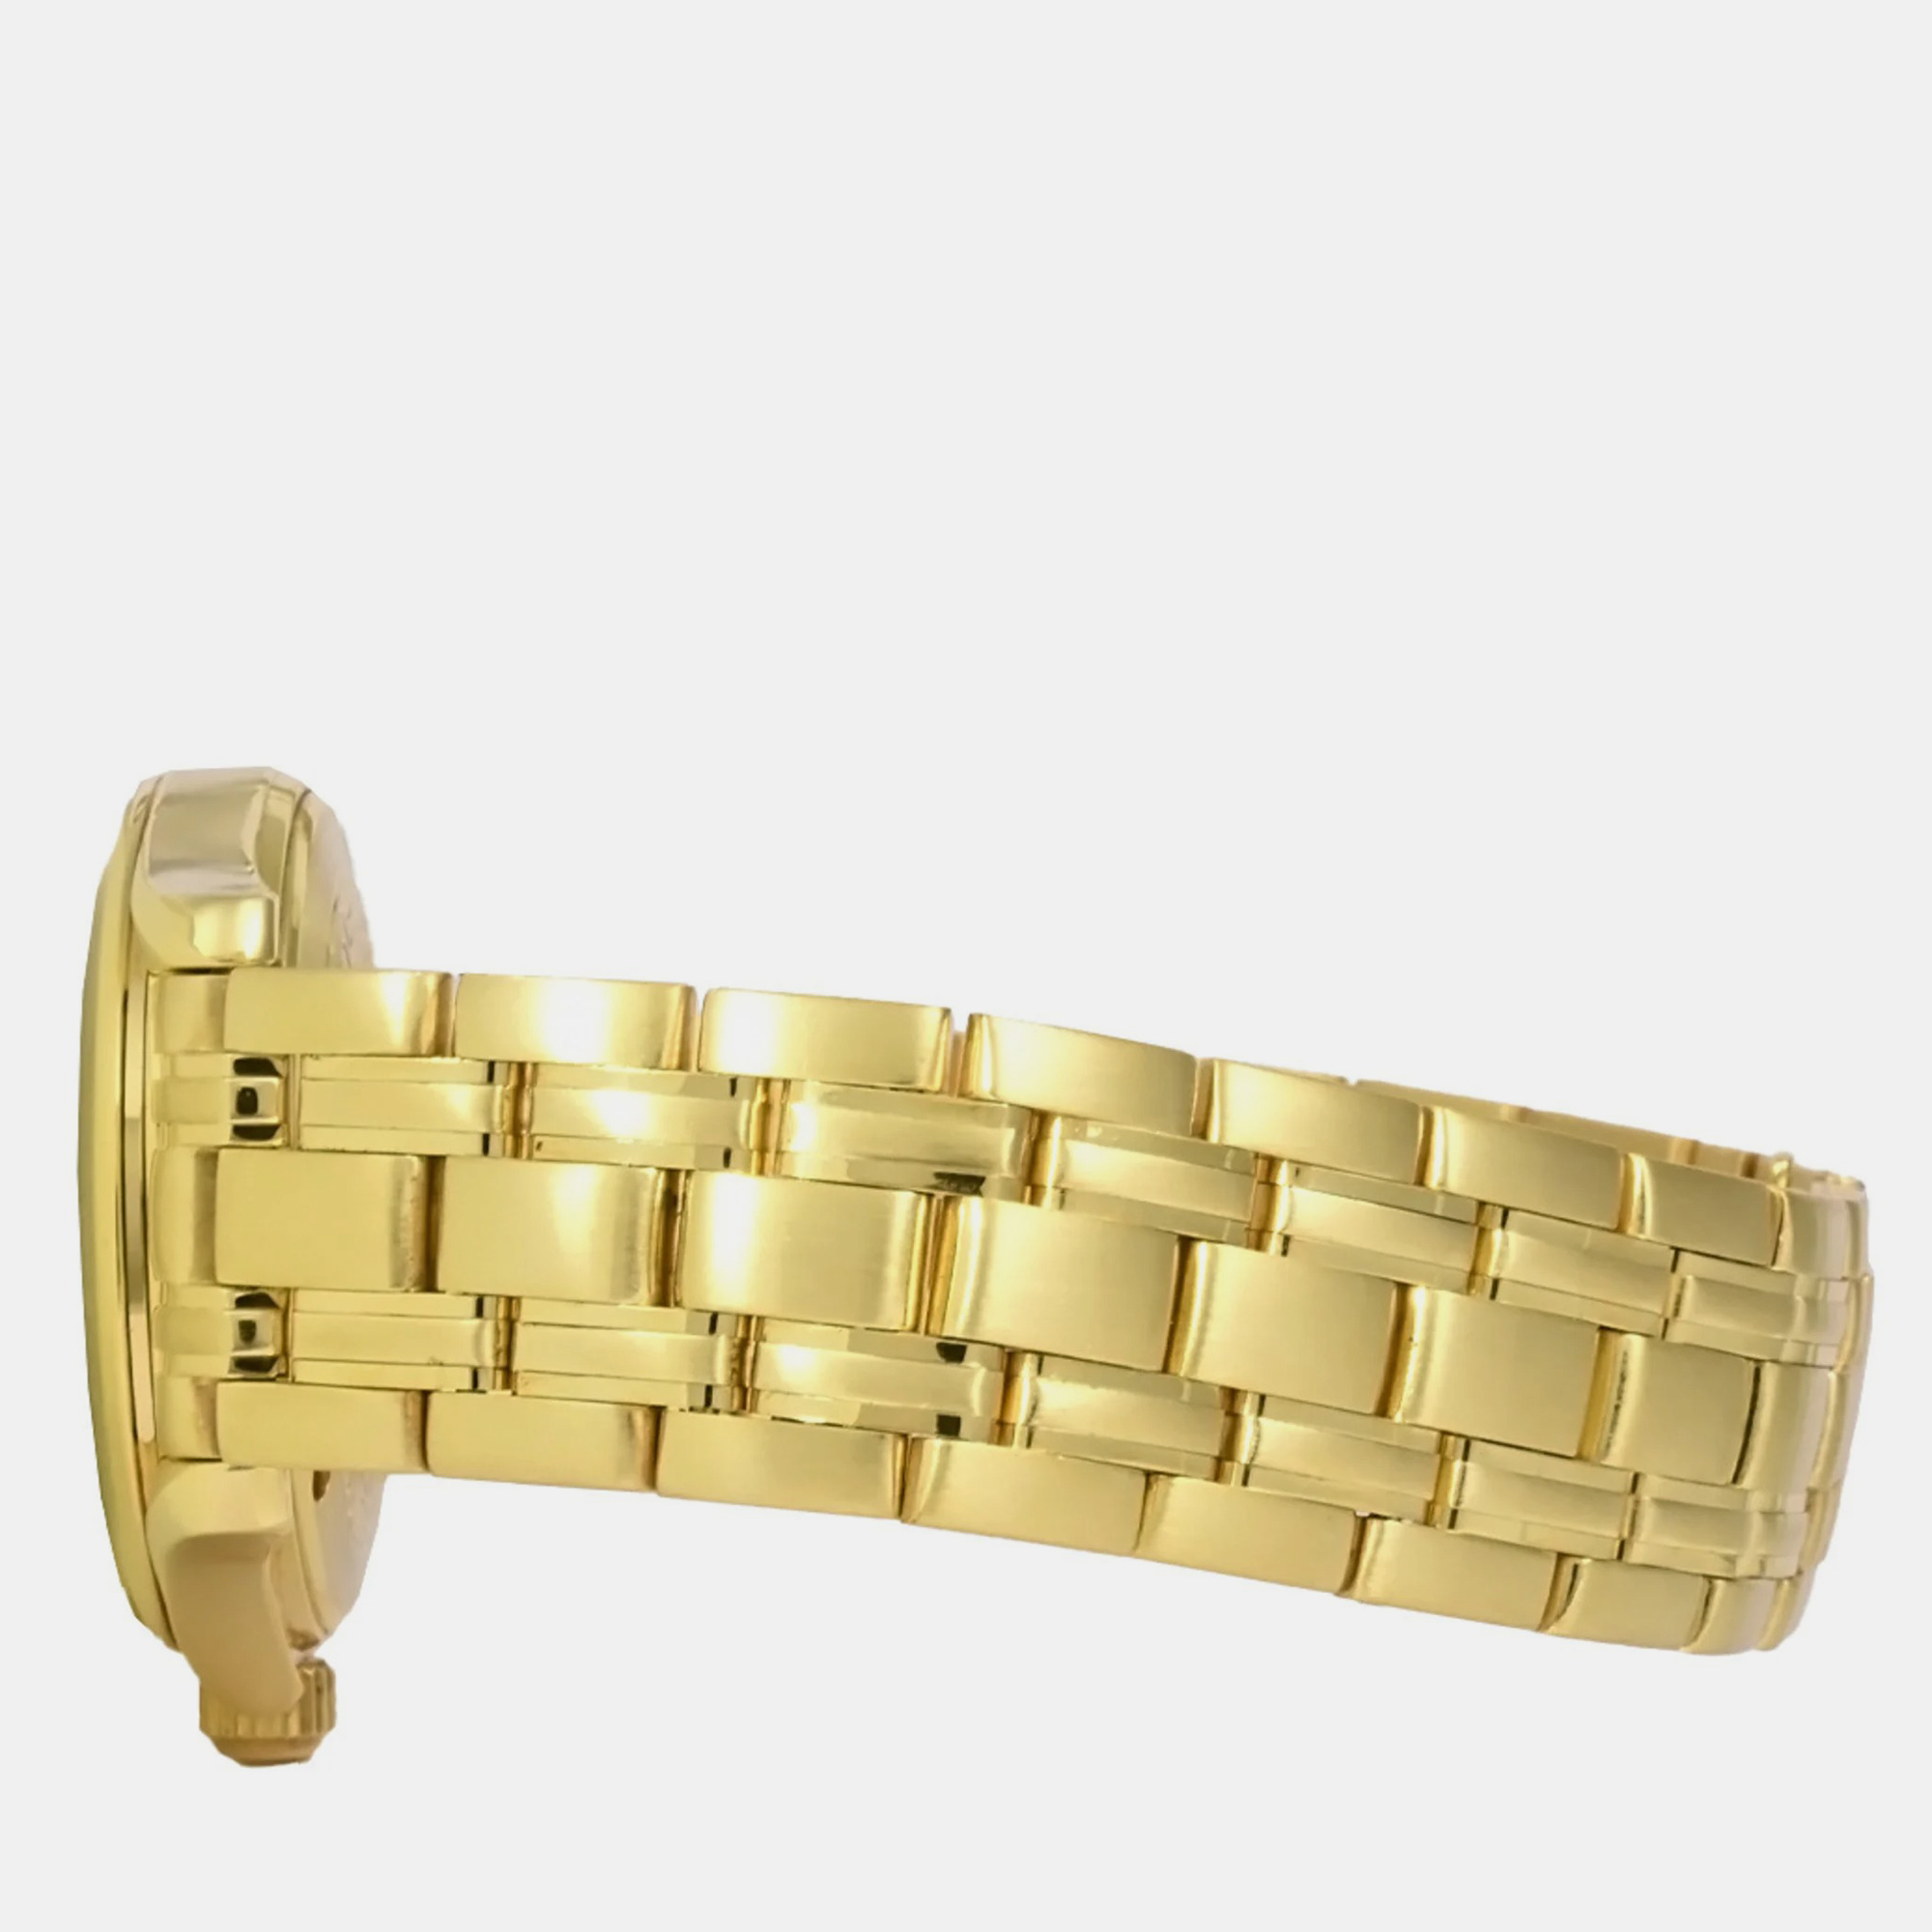 Omega Champagne Yellow Gold Seamaster 2101.11 Automatic Men's Wristwatch 36 Mm